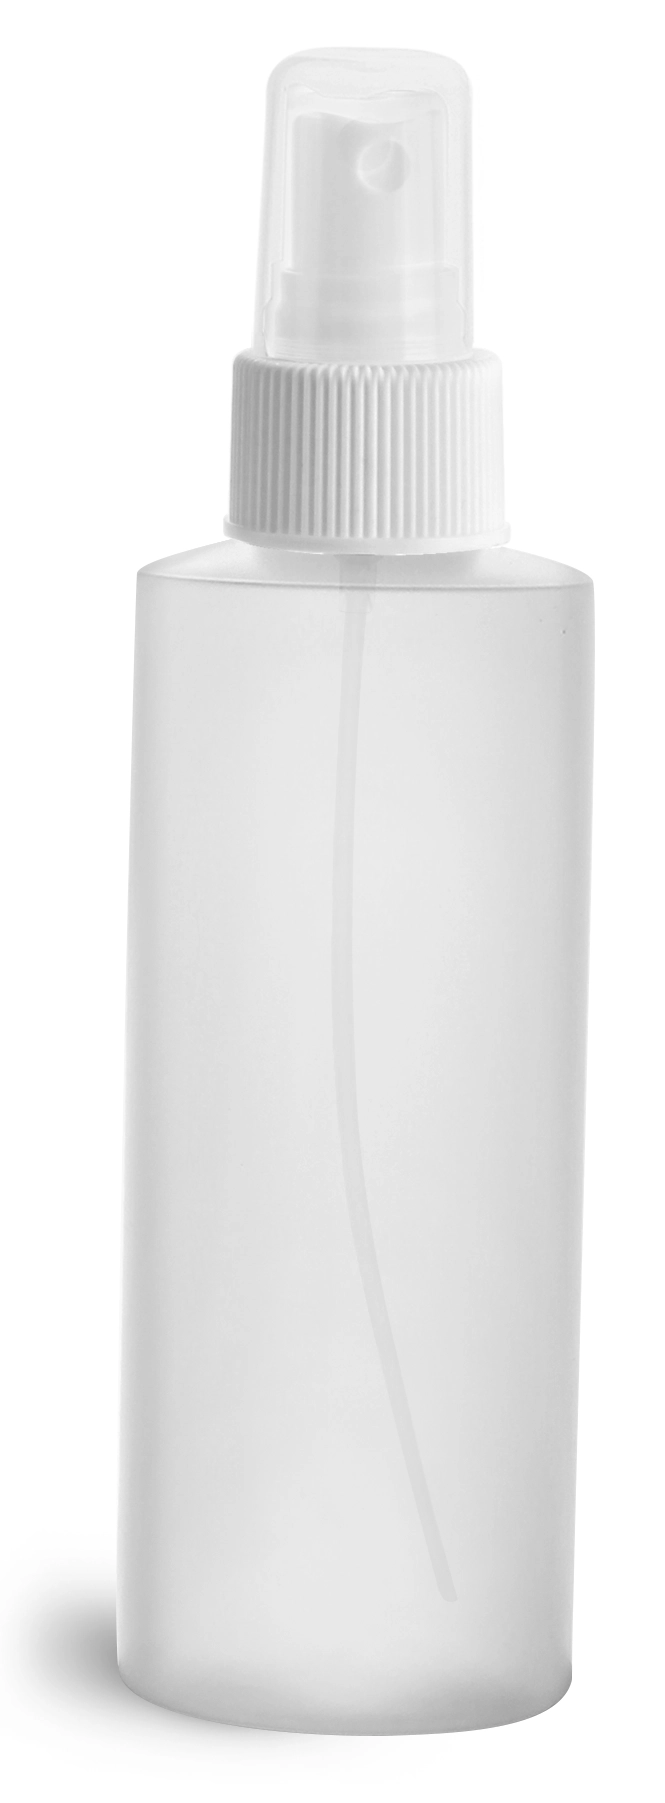 4 oz Natural HDPE Cylinders w/ White Fine Mist Sprayers